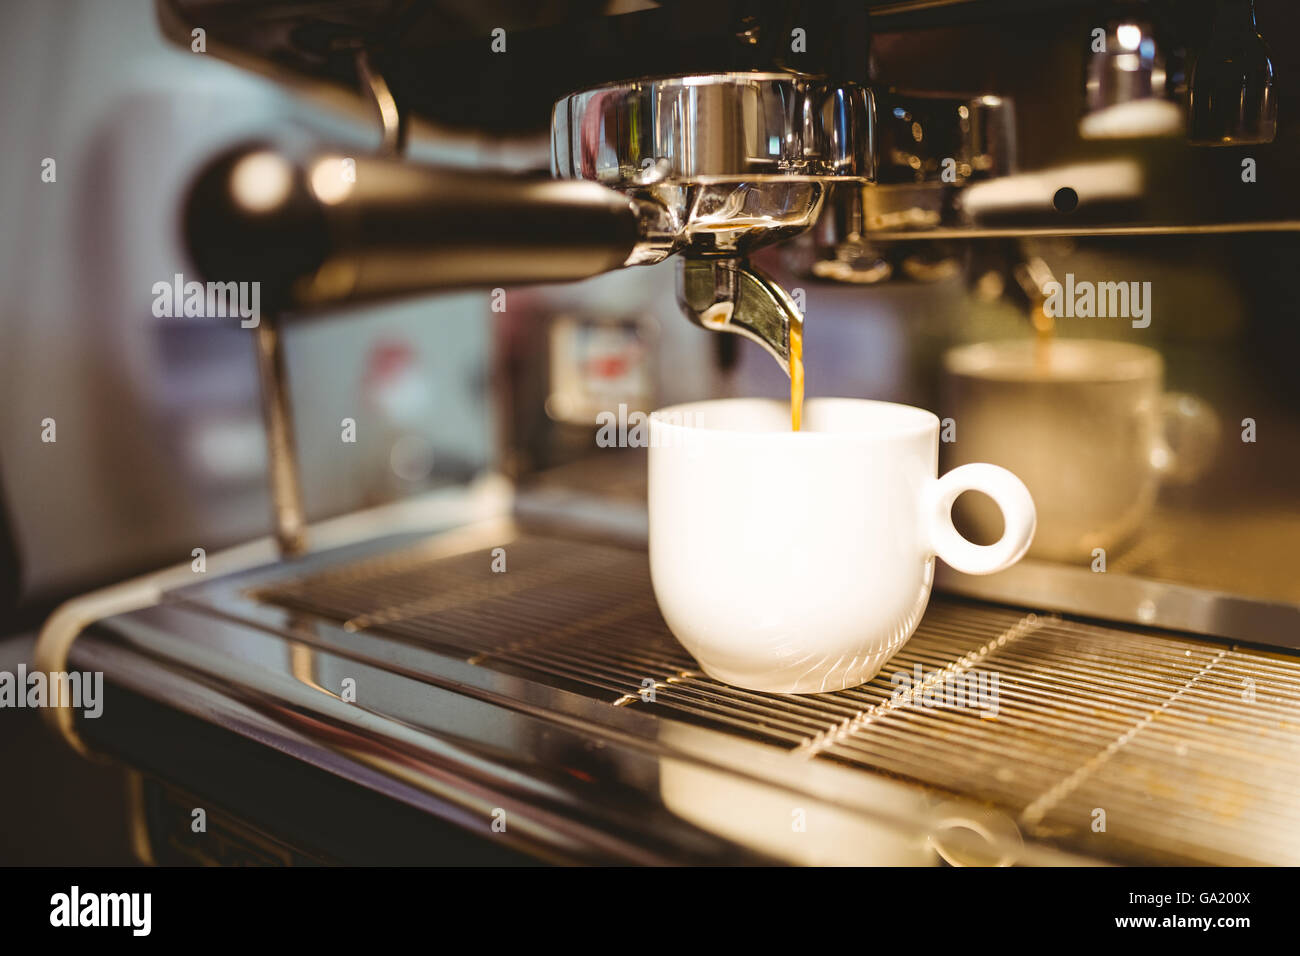 https://c8.alamy.com/comp/GA200X/coffee-machine-making-a-cup-of-coffee-GA200X.jpg